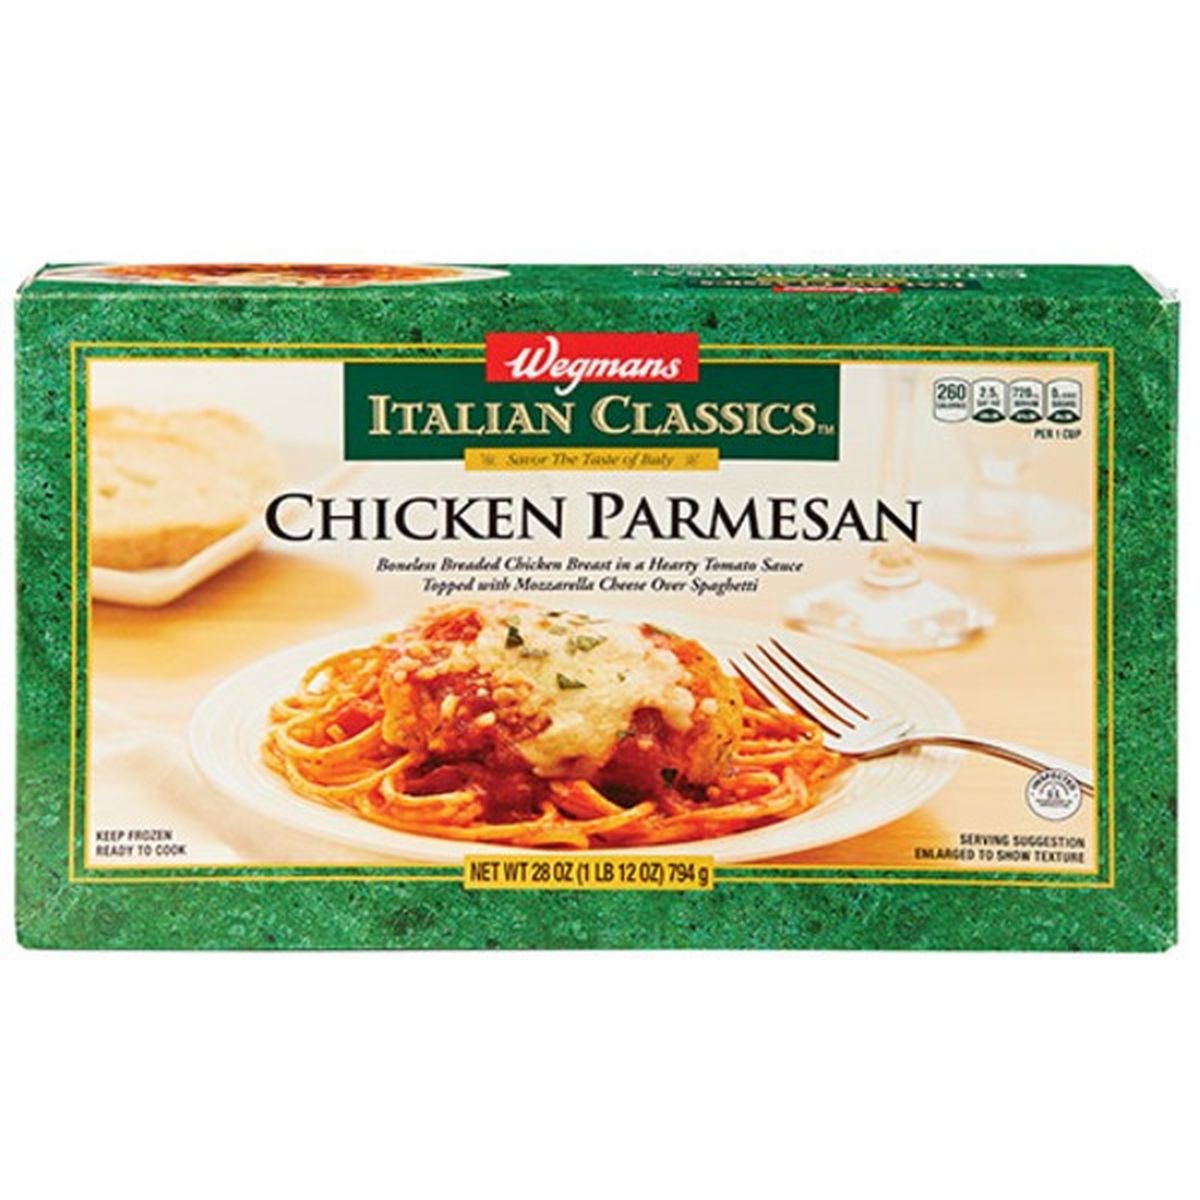 Calories in Wegmans Italian Classics Chicken Parmesan